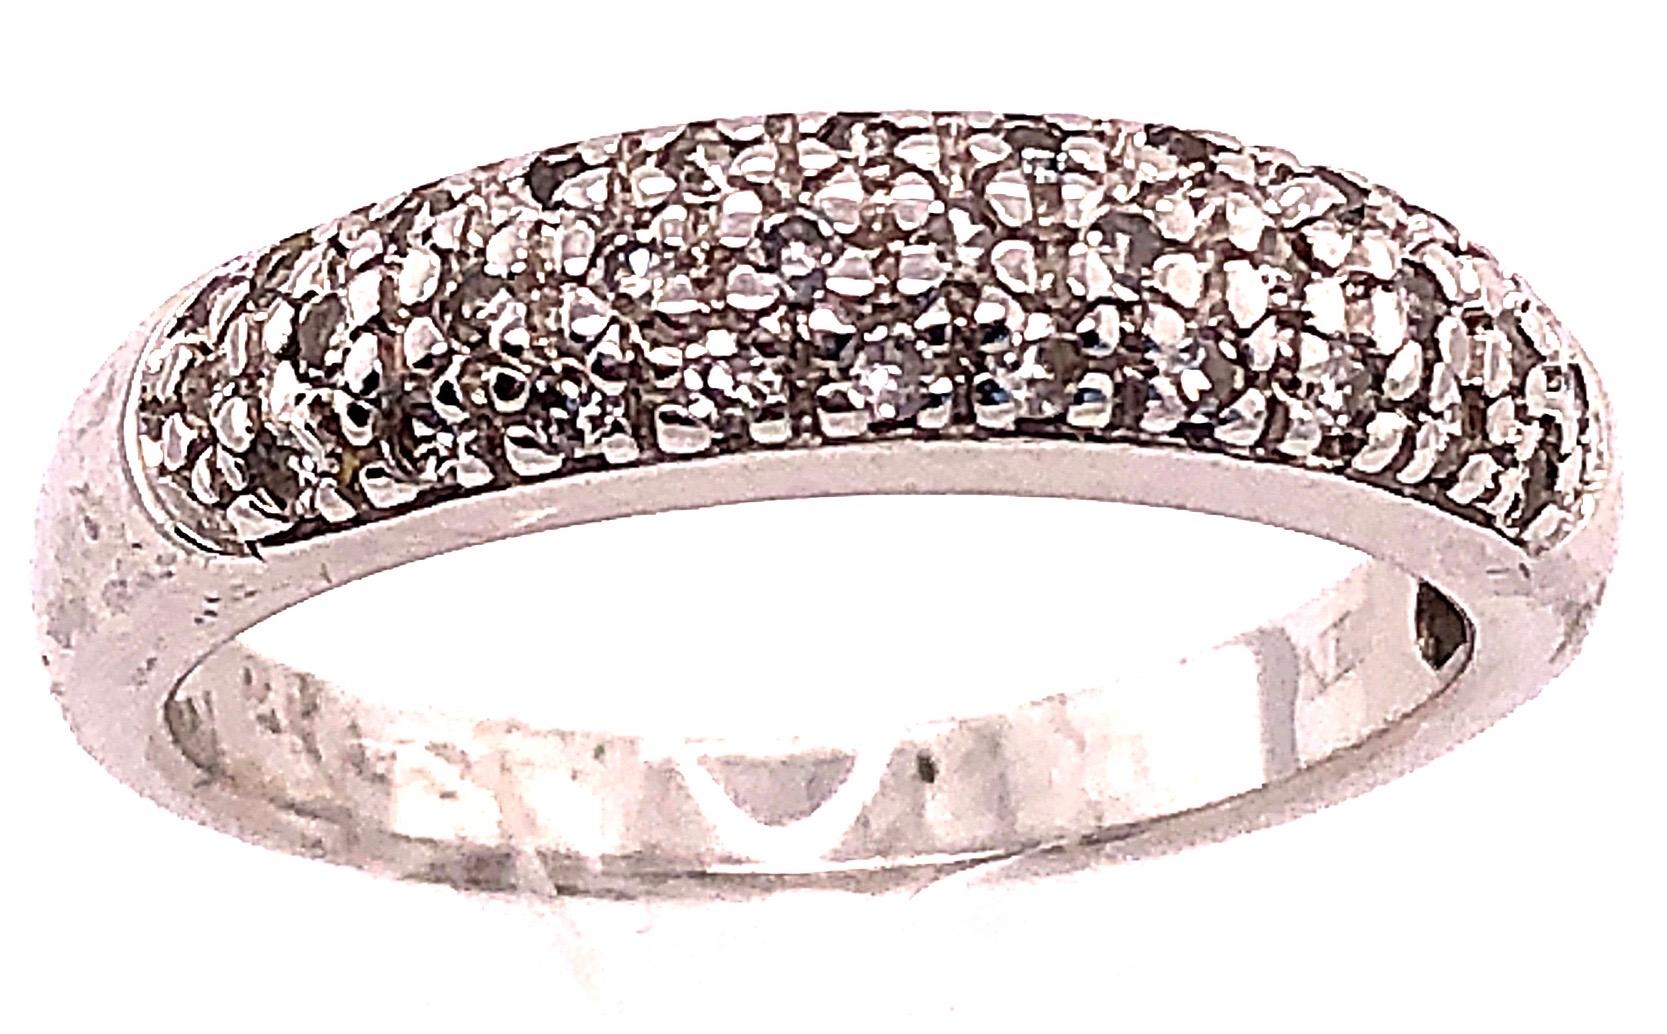 14 Karat White Gold Diamond Half Anniversary Ring Wedding Bridal Band Size 6.75.
0.40 total diamond weight.
3.20 grams total weight.